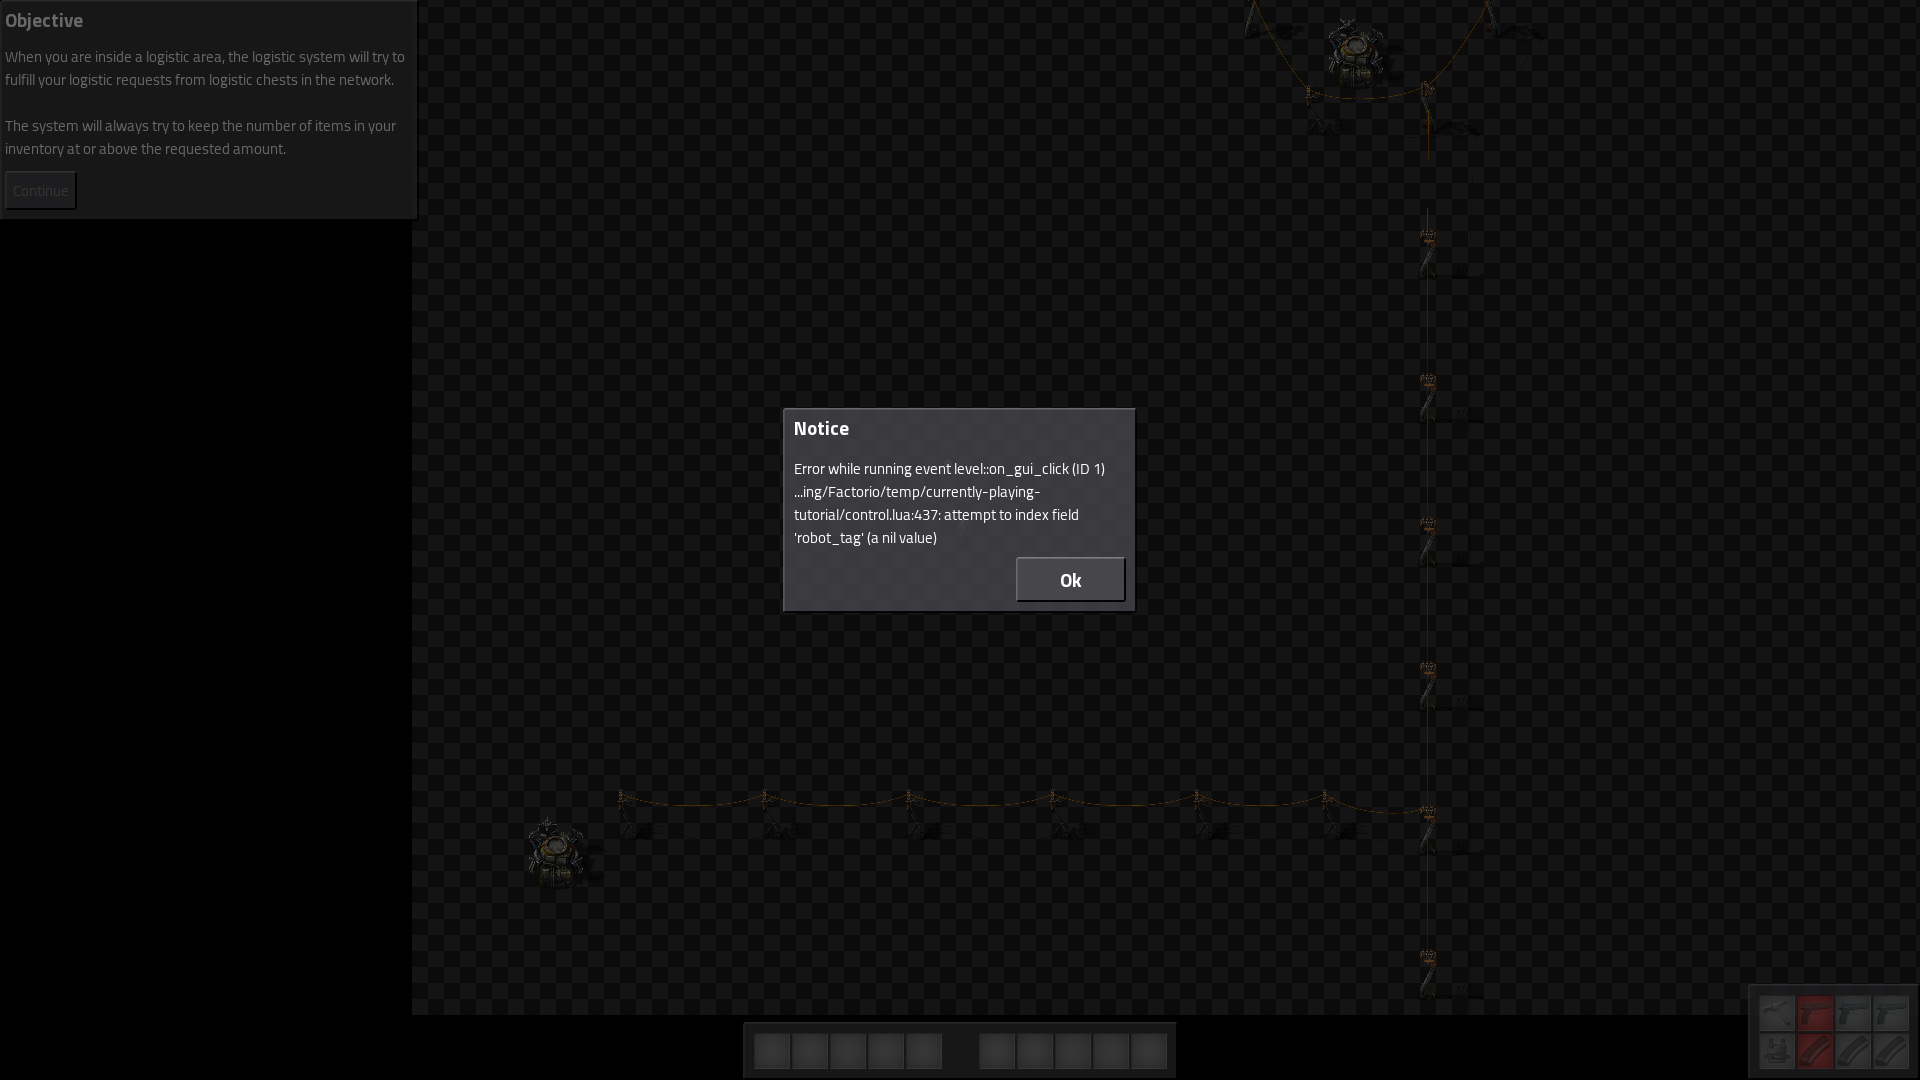 screenshot of error as seen in game